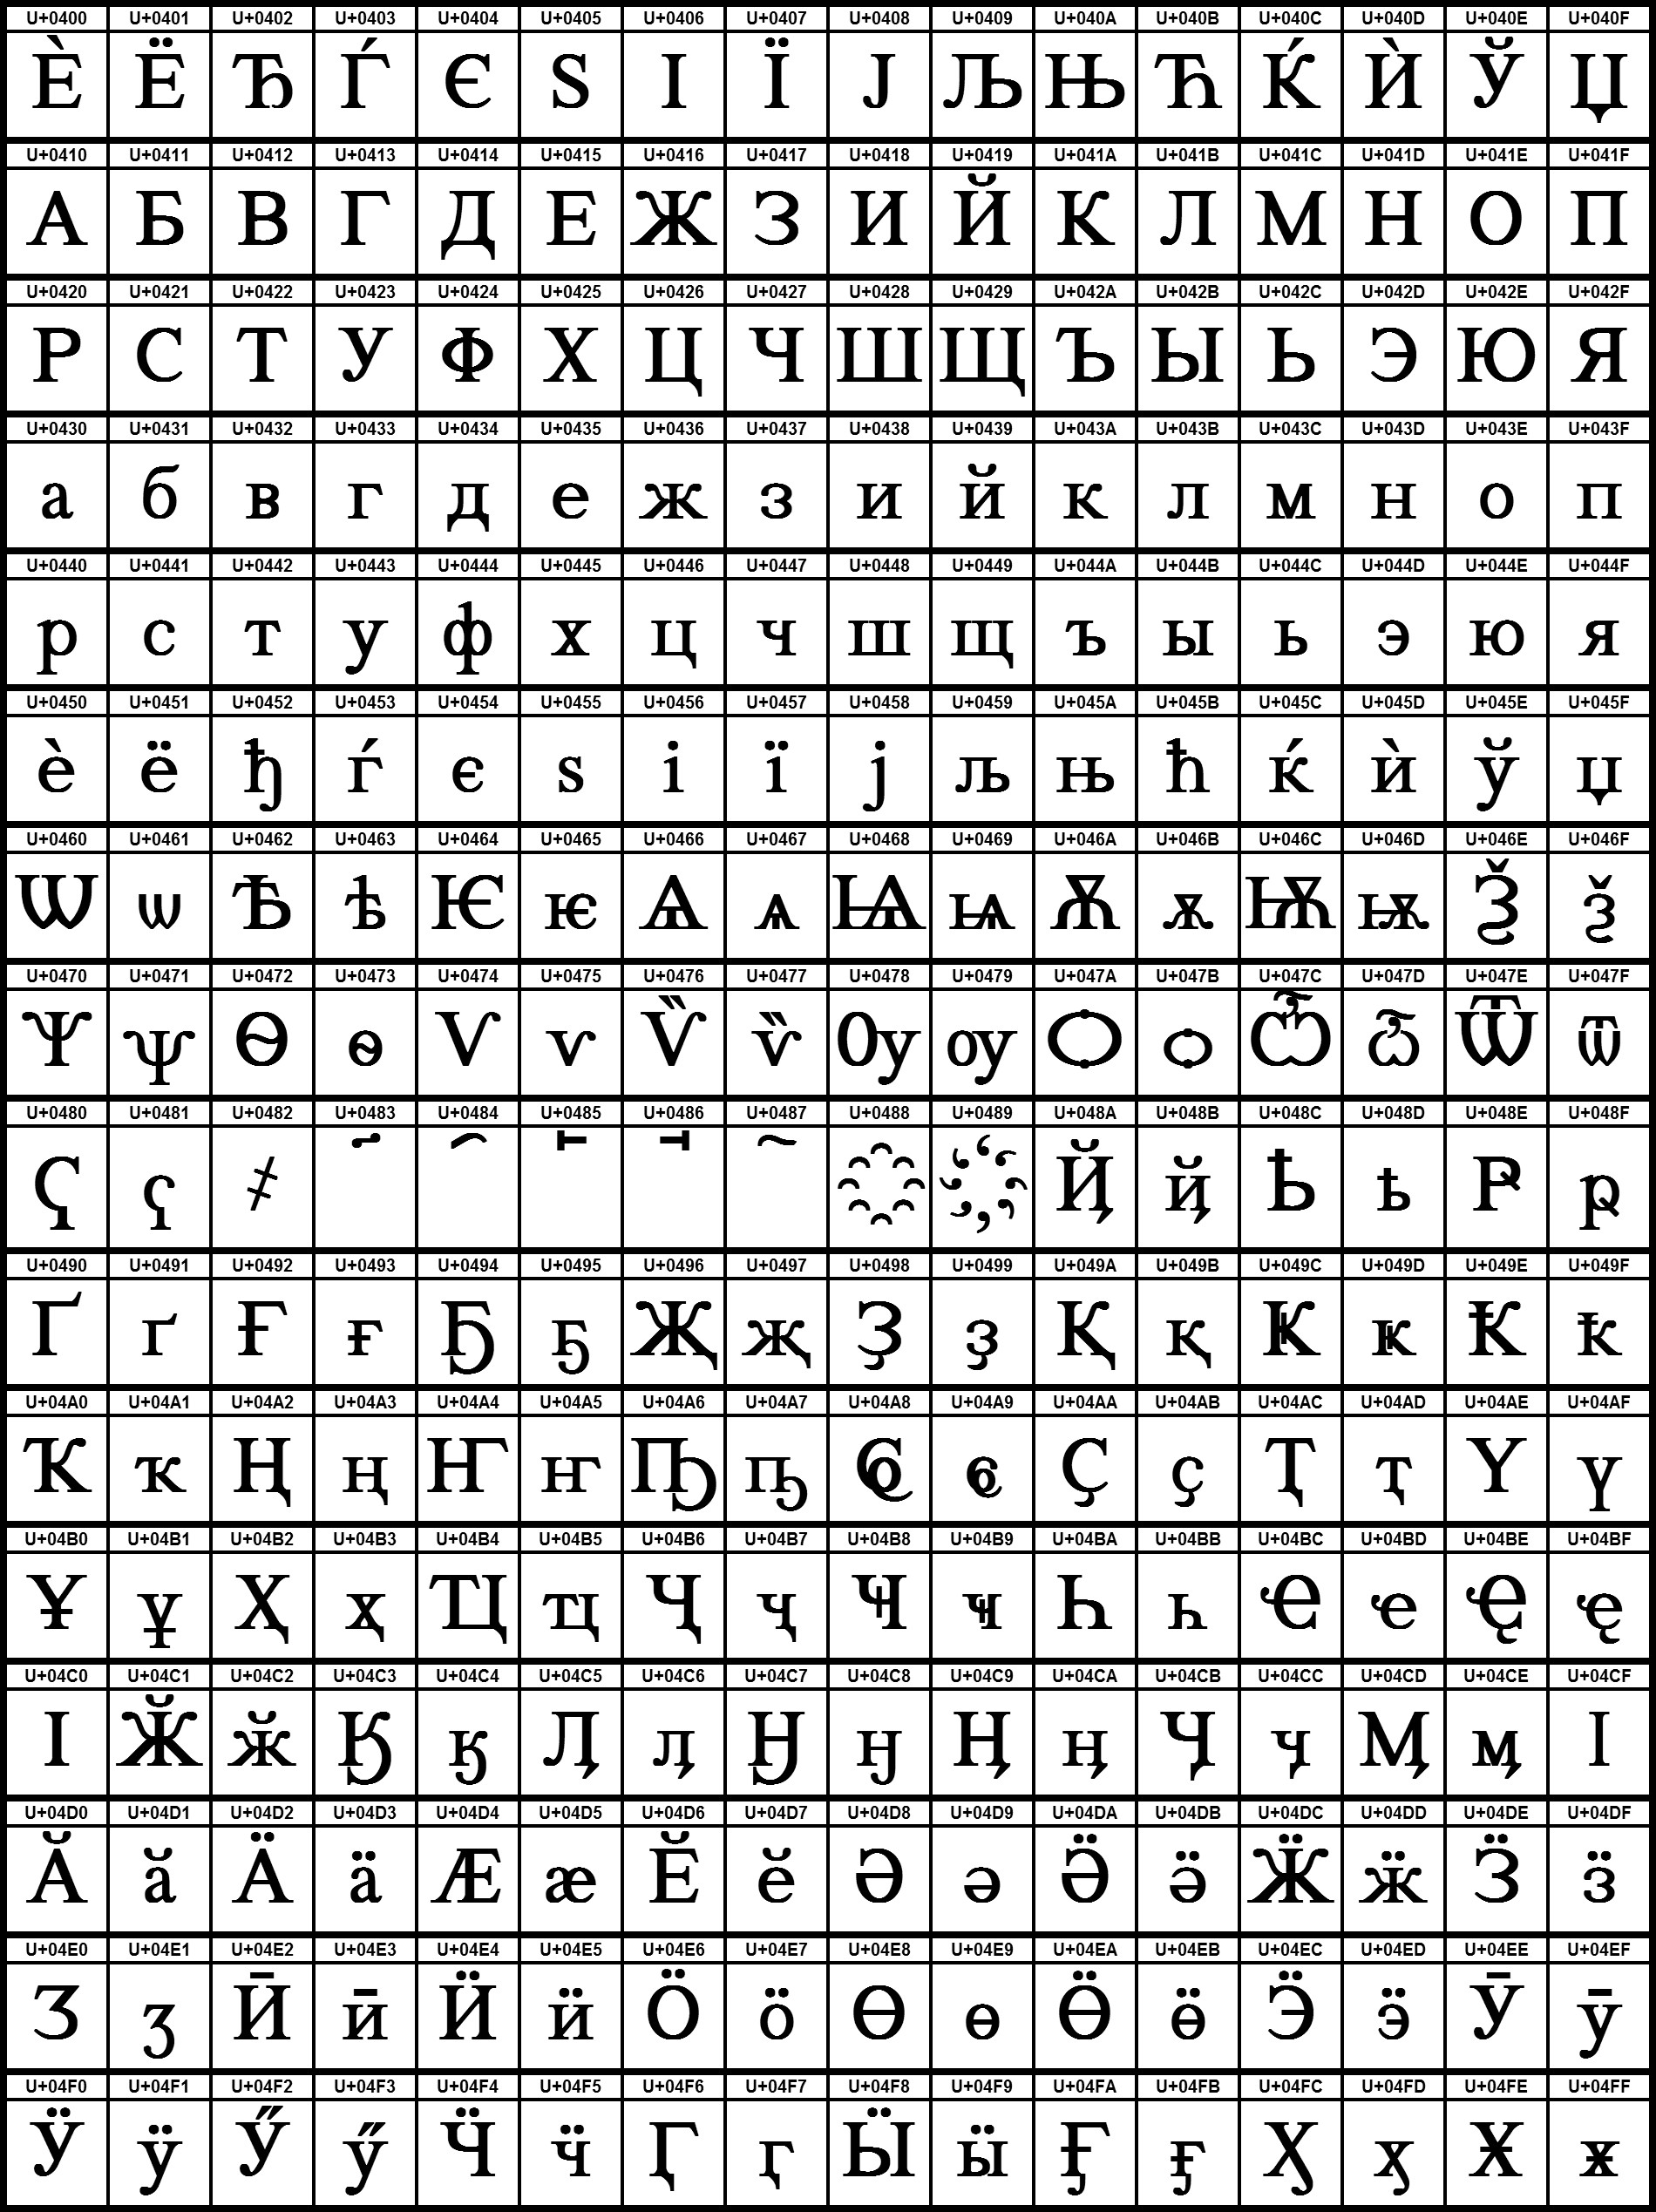 Unicode Tabelle
 Unicodeblock Kyrillisch –